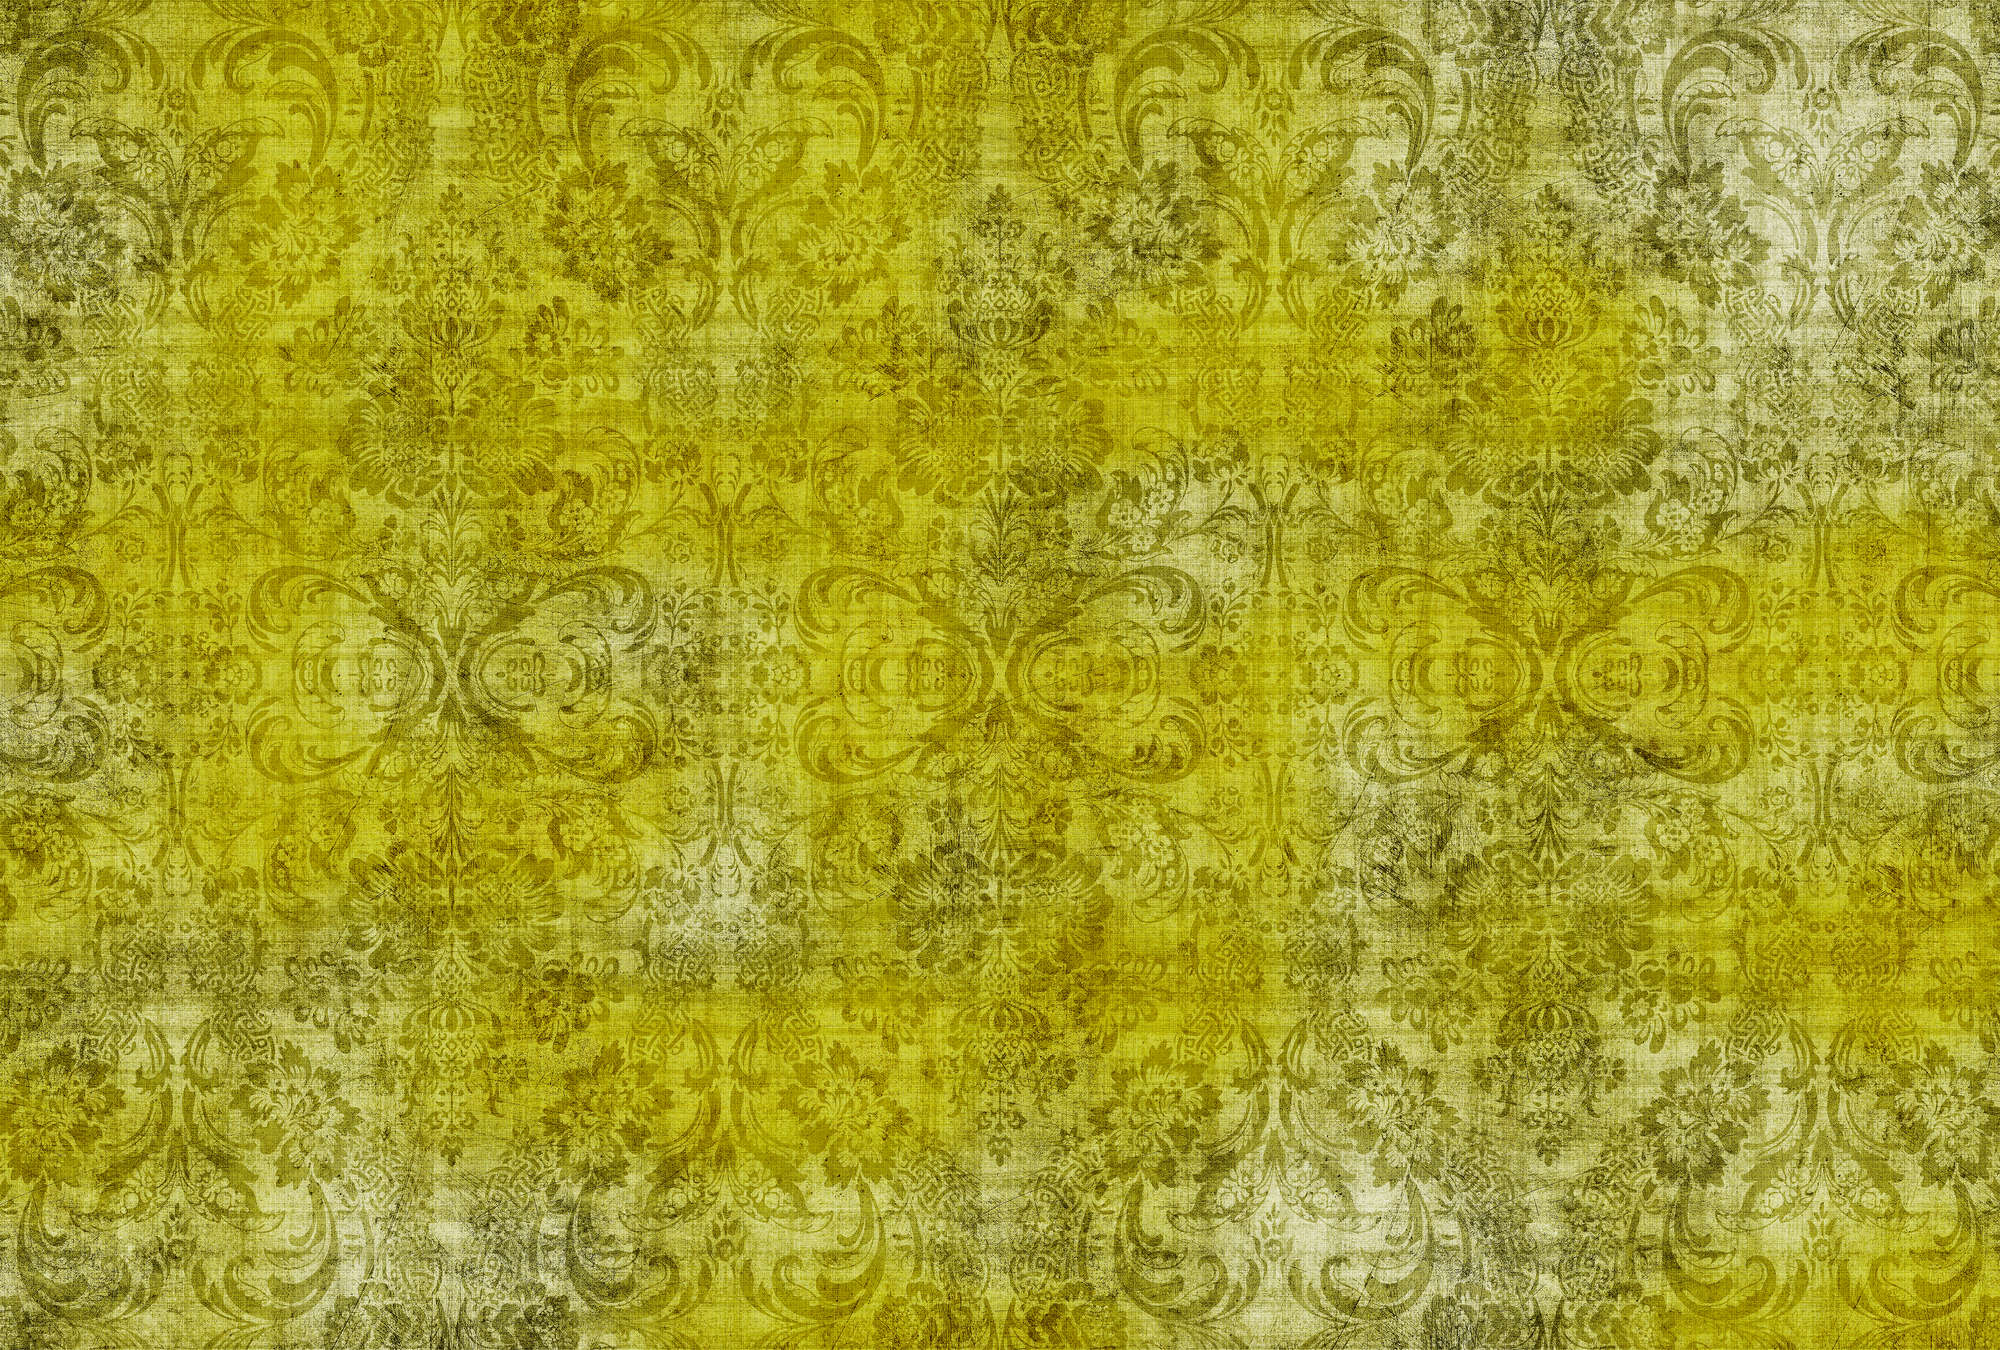             Damasco antiguo 1 - Ornamentos sobre papel pintado fotográfico moteado amarillo en estructura de lino natural - Amarillo | Estructura no tejida
        